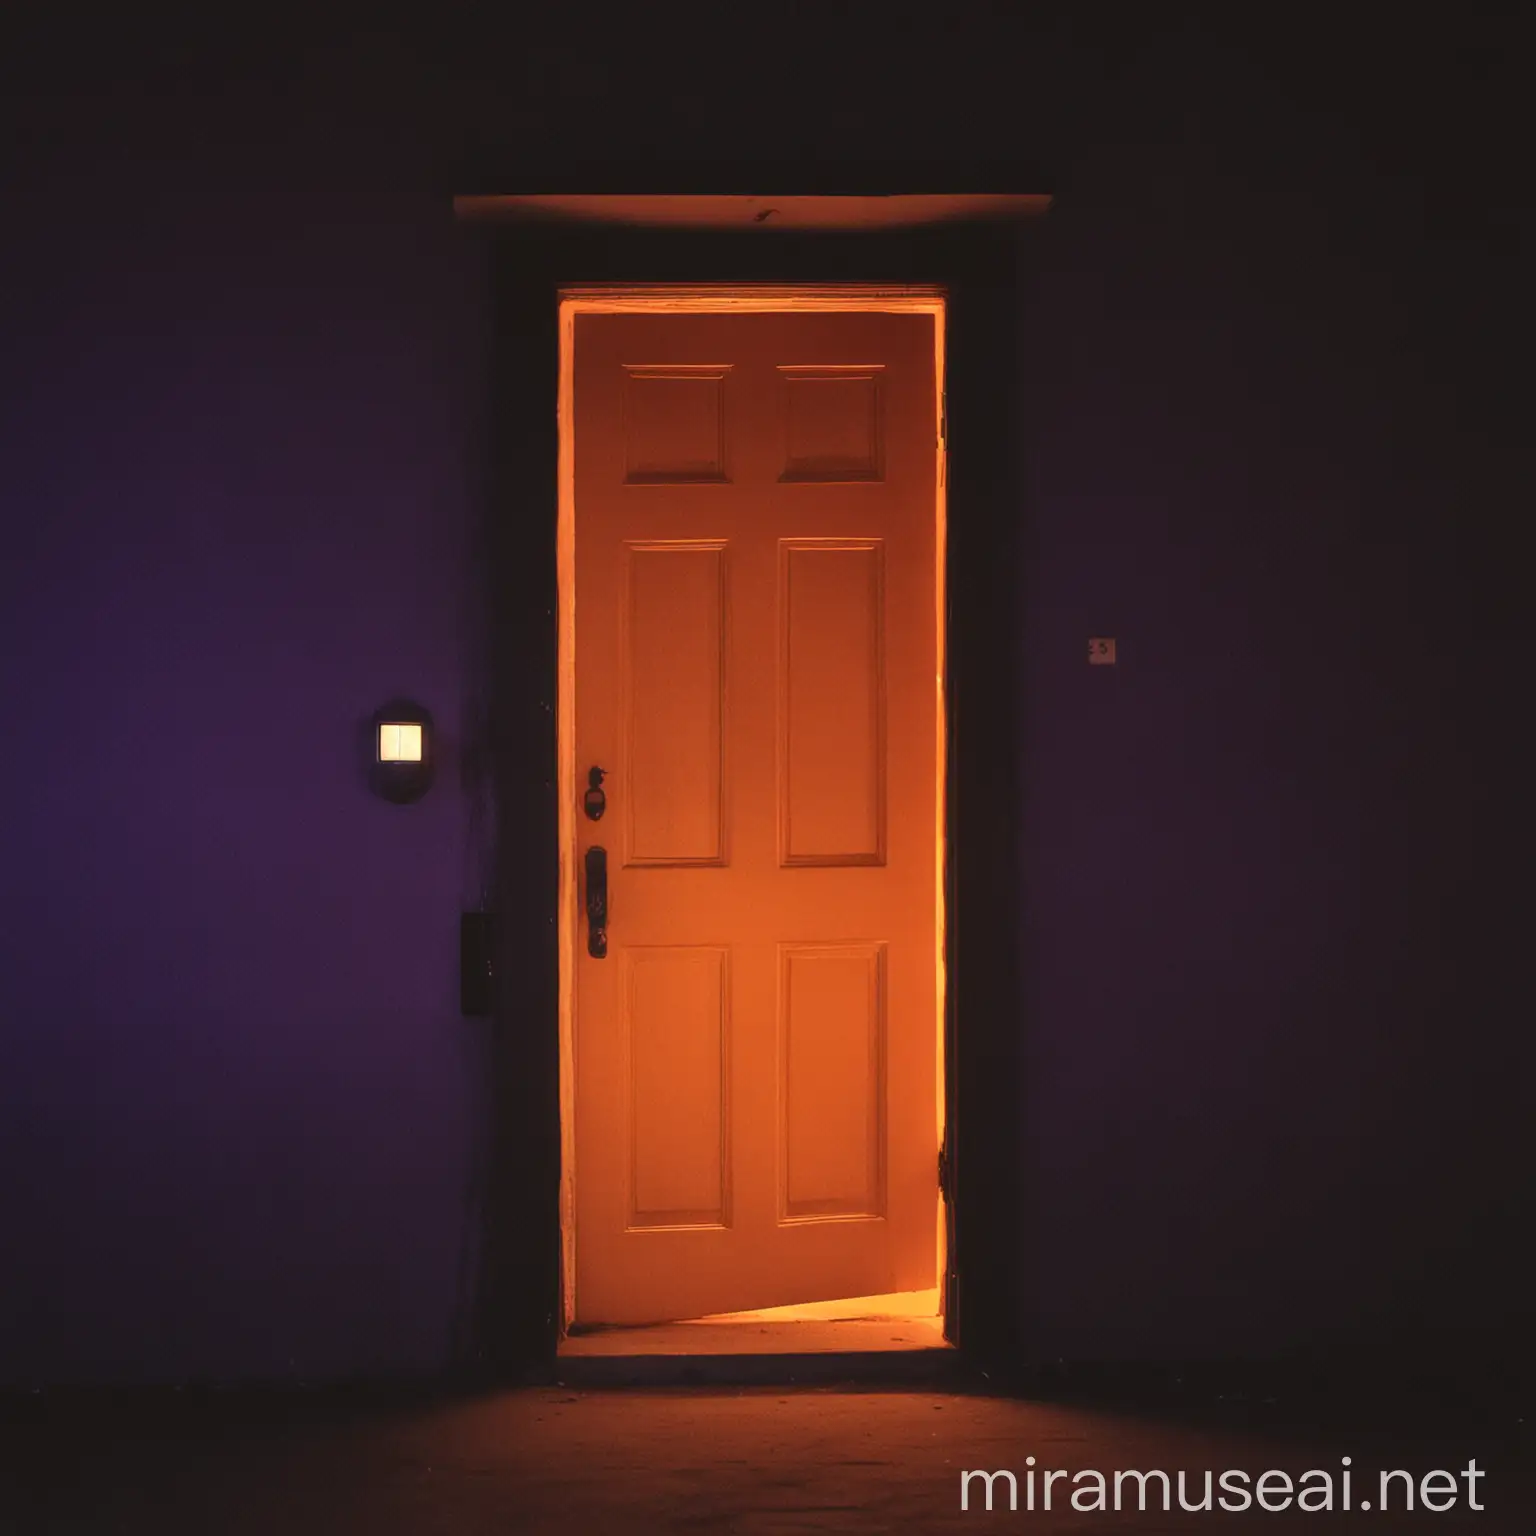 Orange light come through a  dark purple 
door 